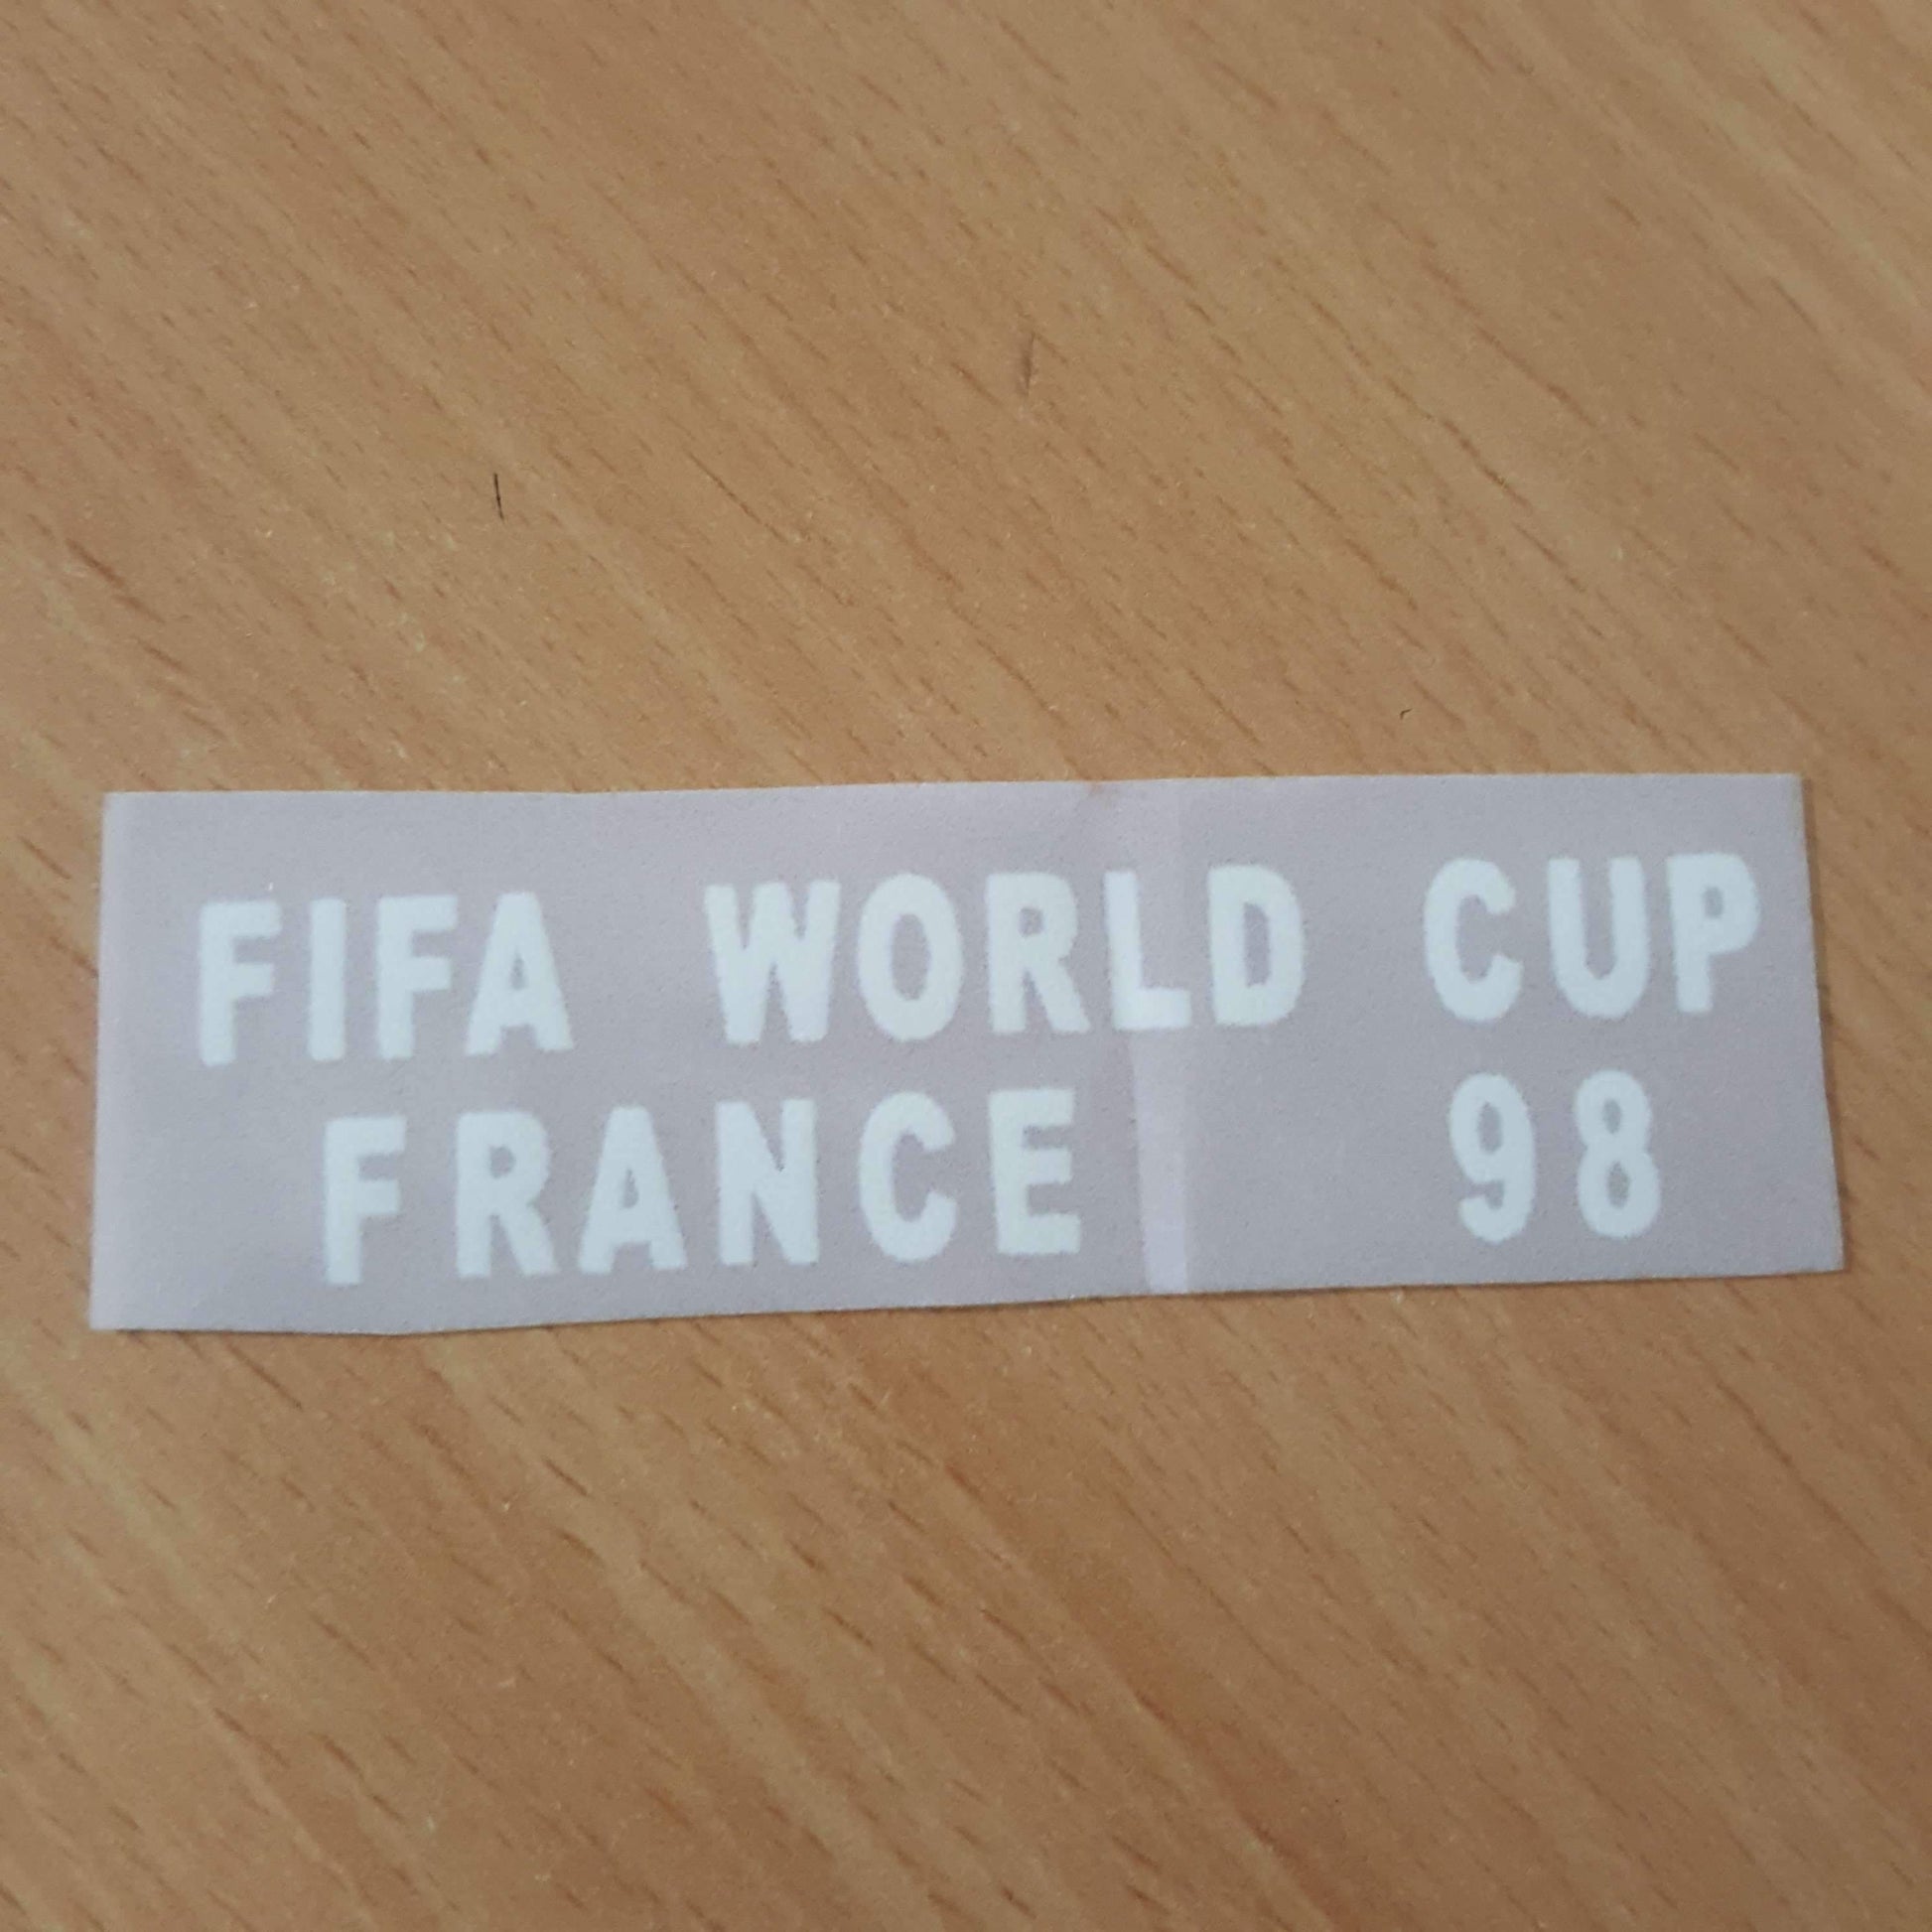 FIFA World Cup France 98 - ClassicFootballJersey